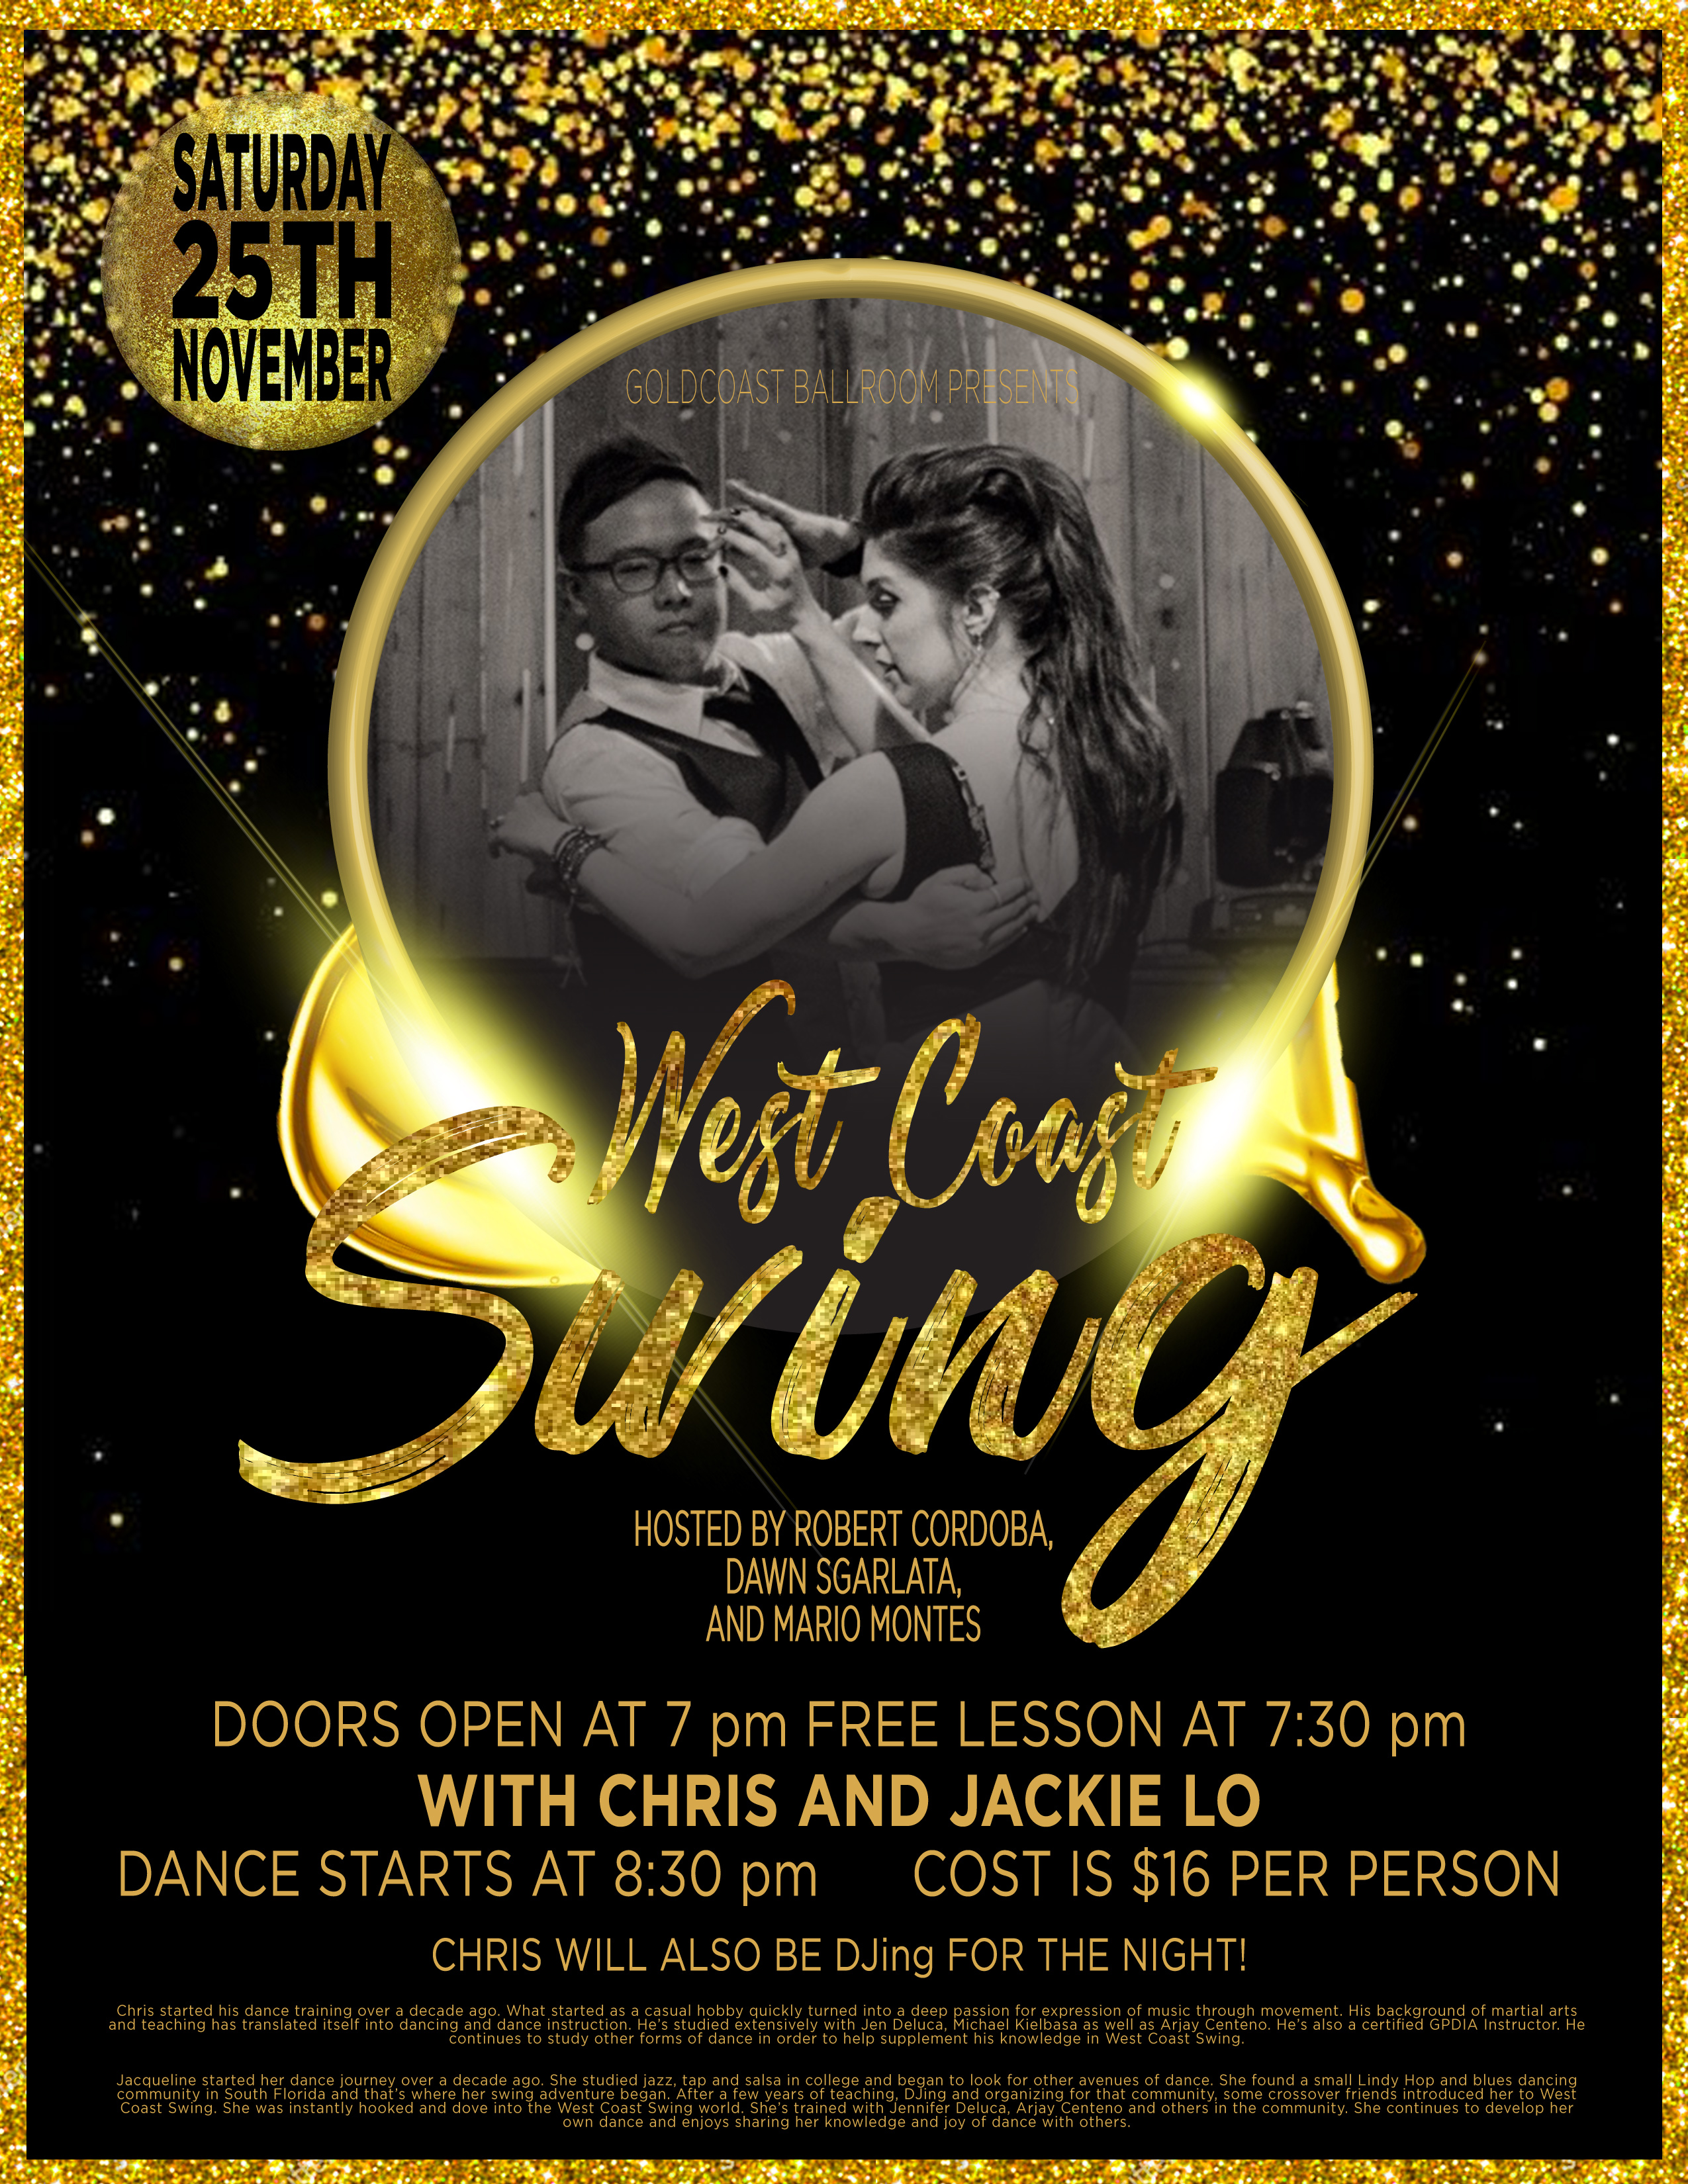 West Coast Swing - 4th Saturday Dance - November 25, 2017 - at Goldcoast Ballroom